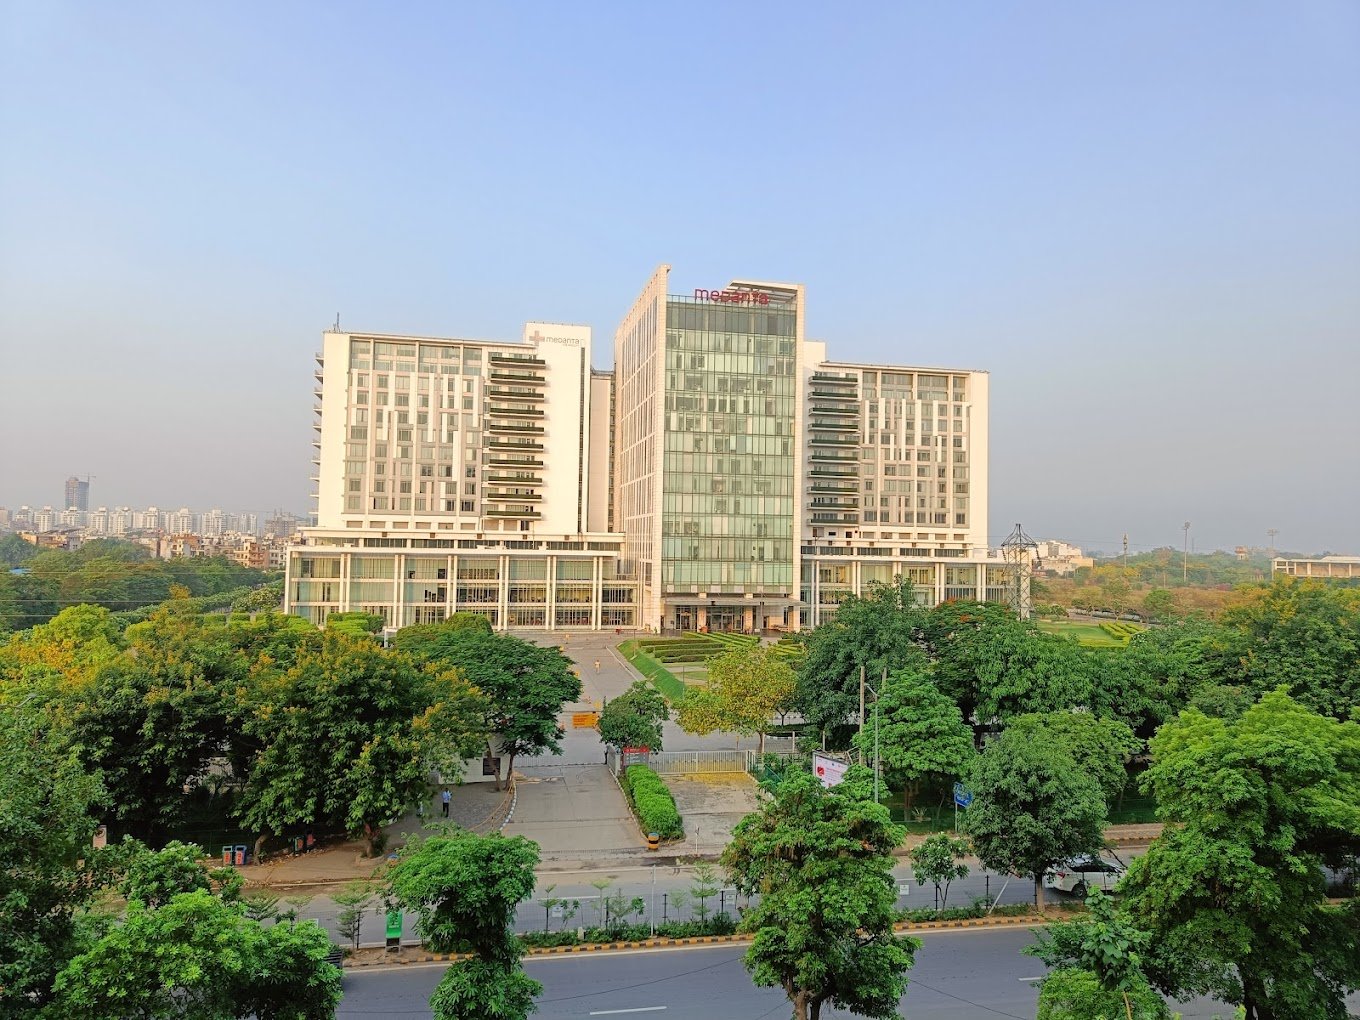 Medanta Hospital Gurgaon's Images